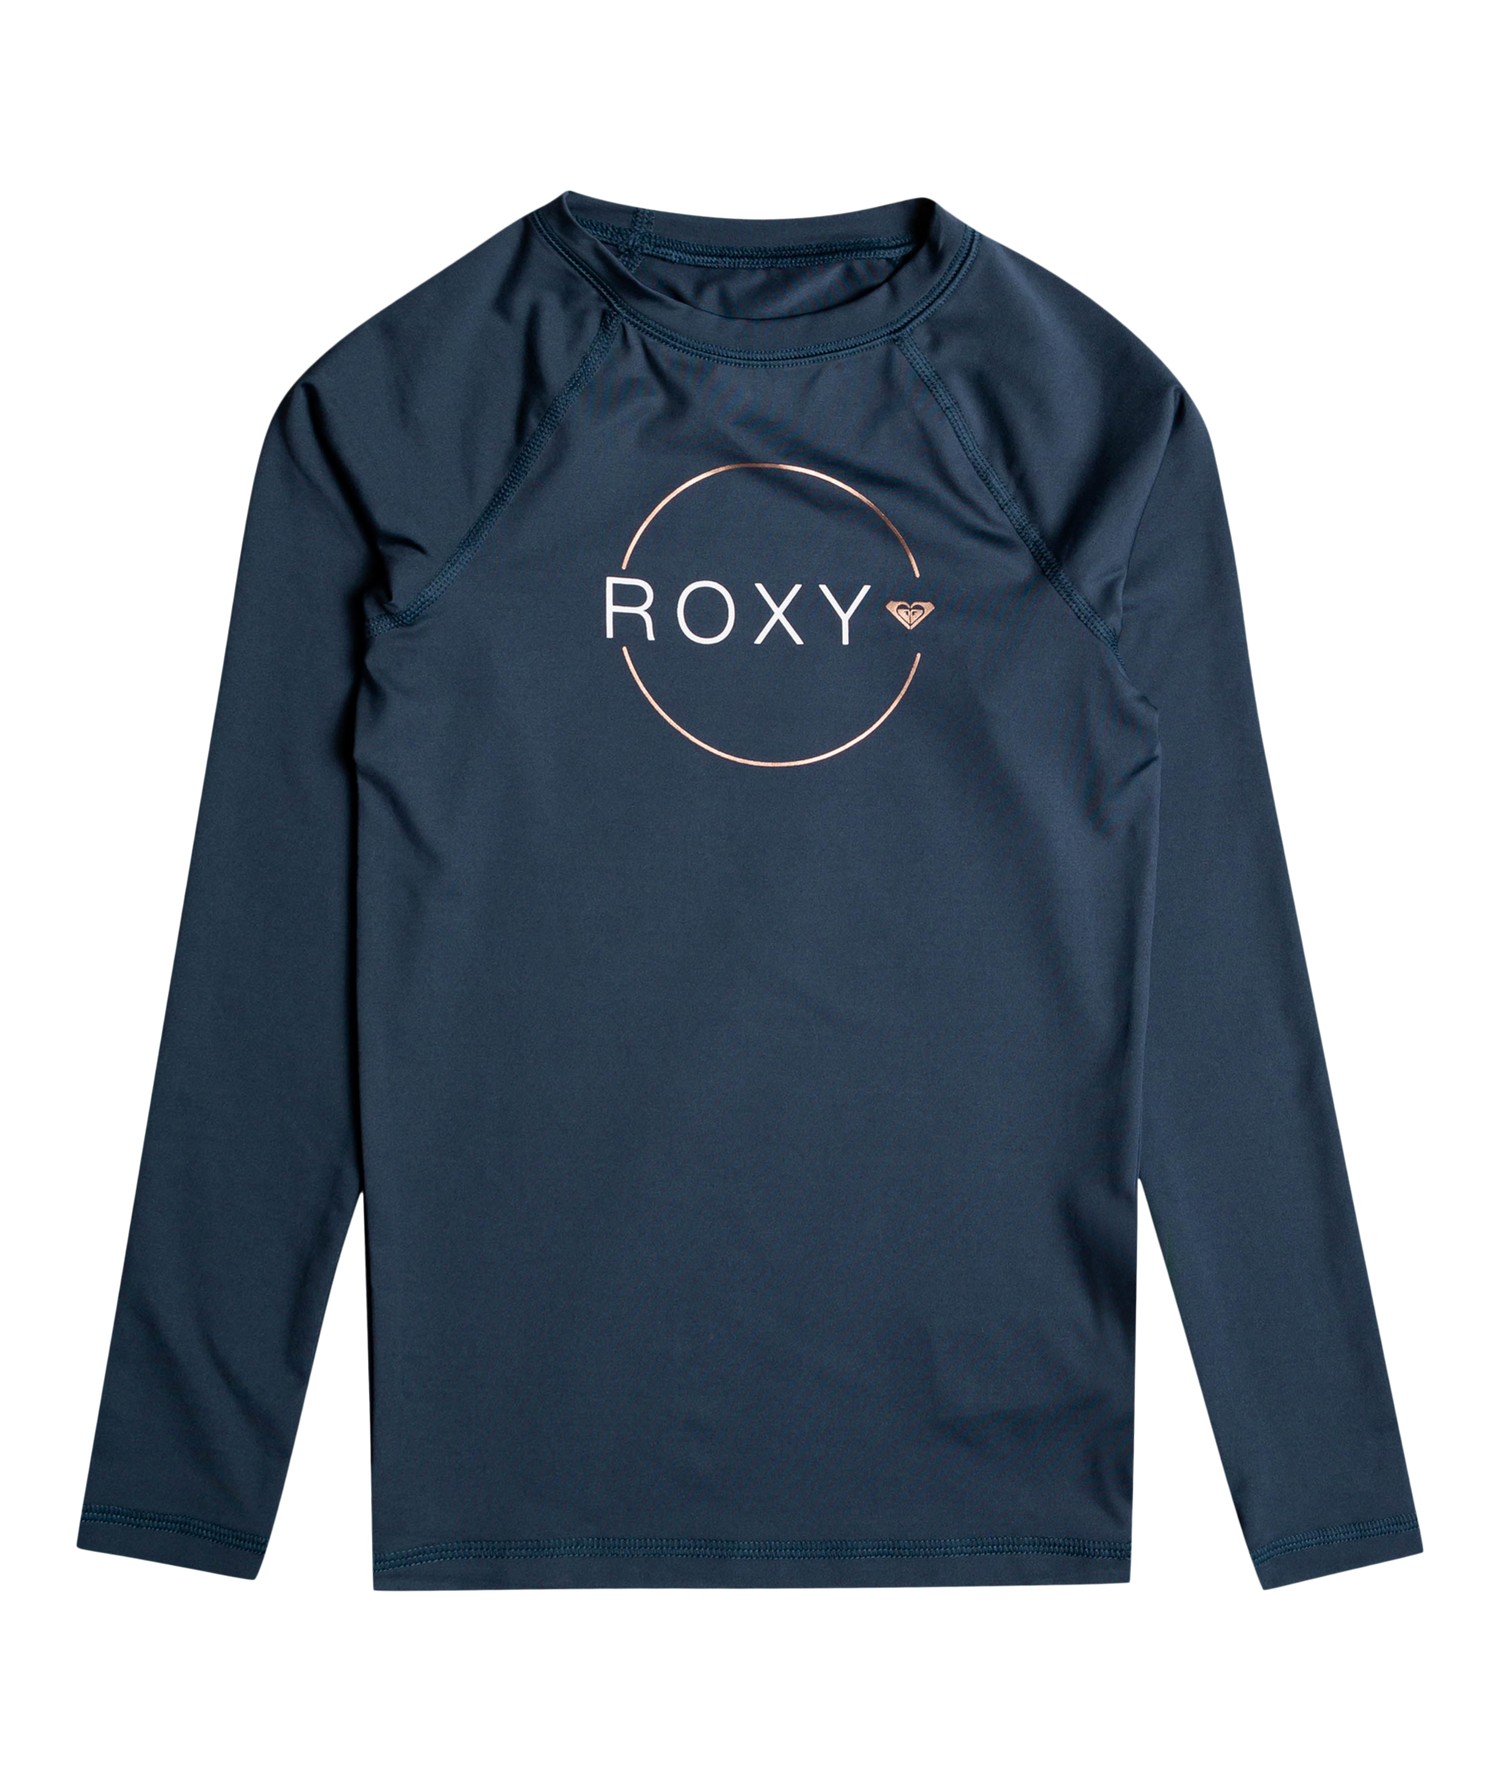 Roxy - UV Rashguard for girls - Beach Classic - Long sleeve - Mood Indigo